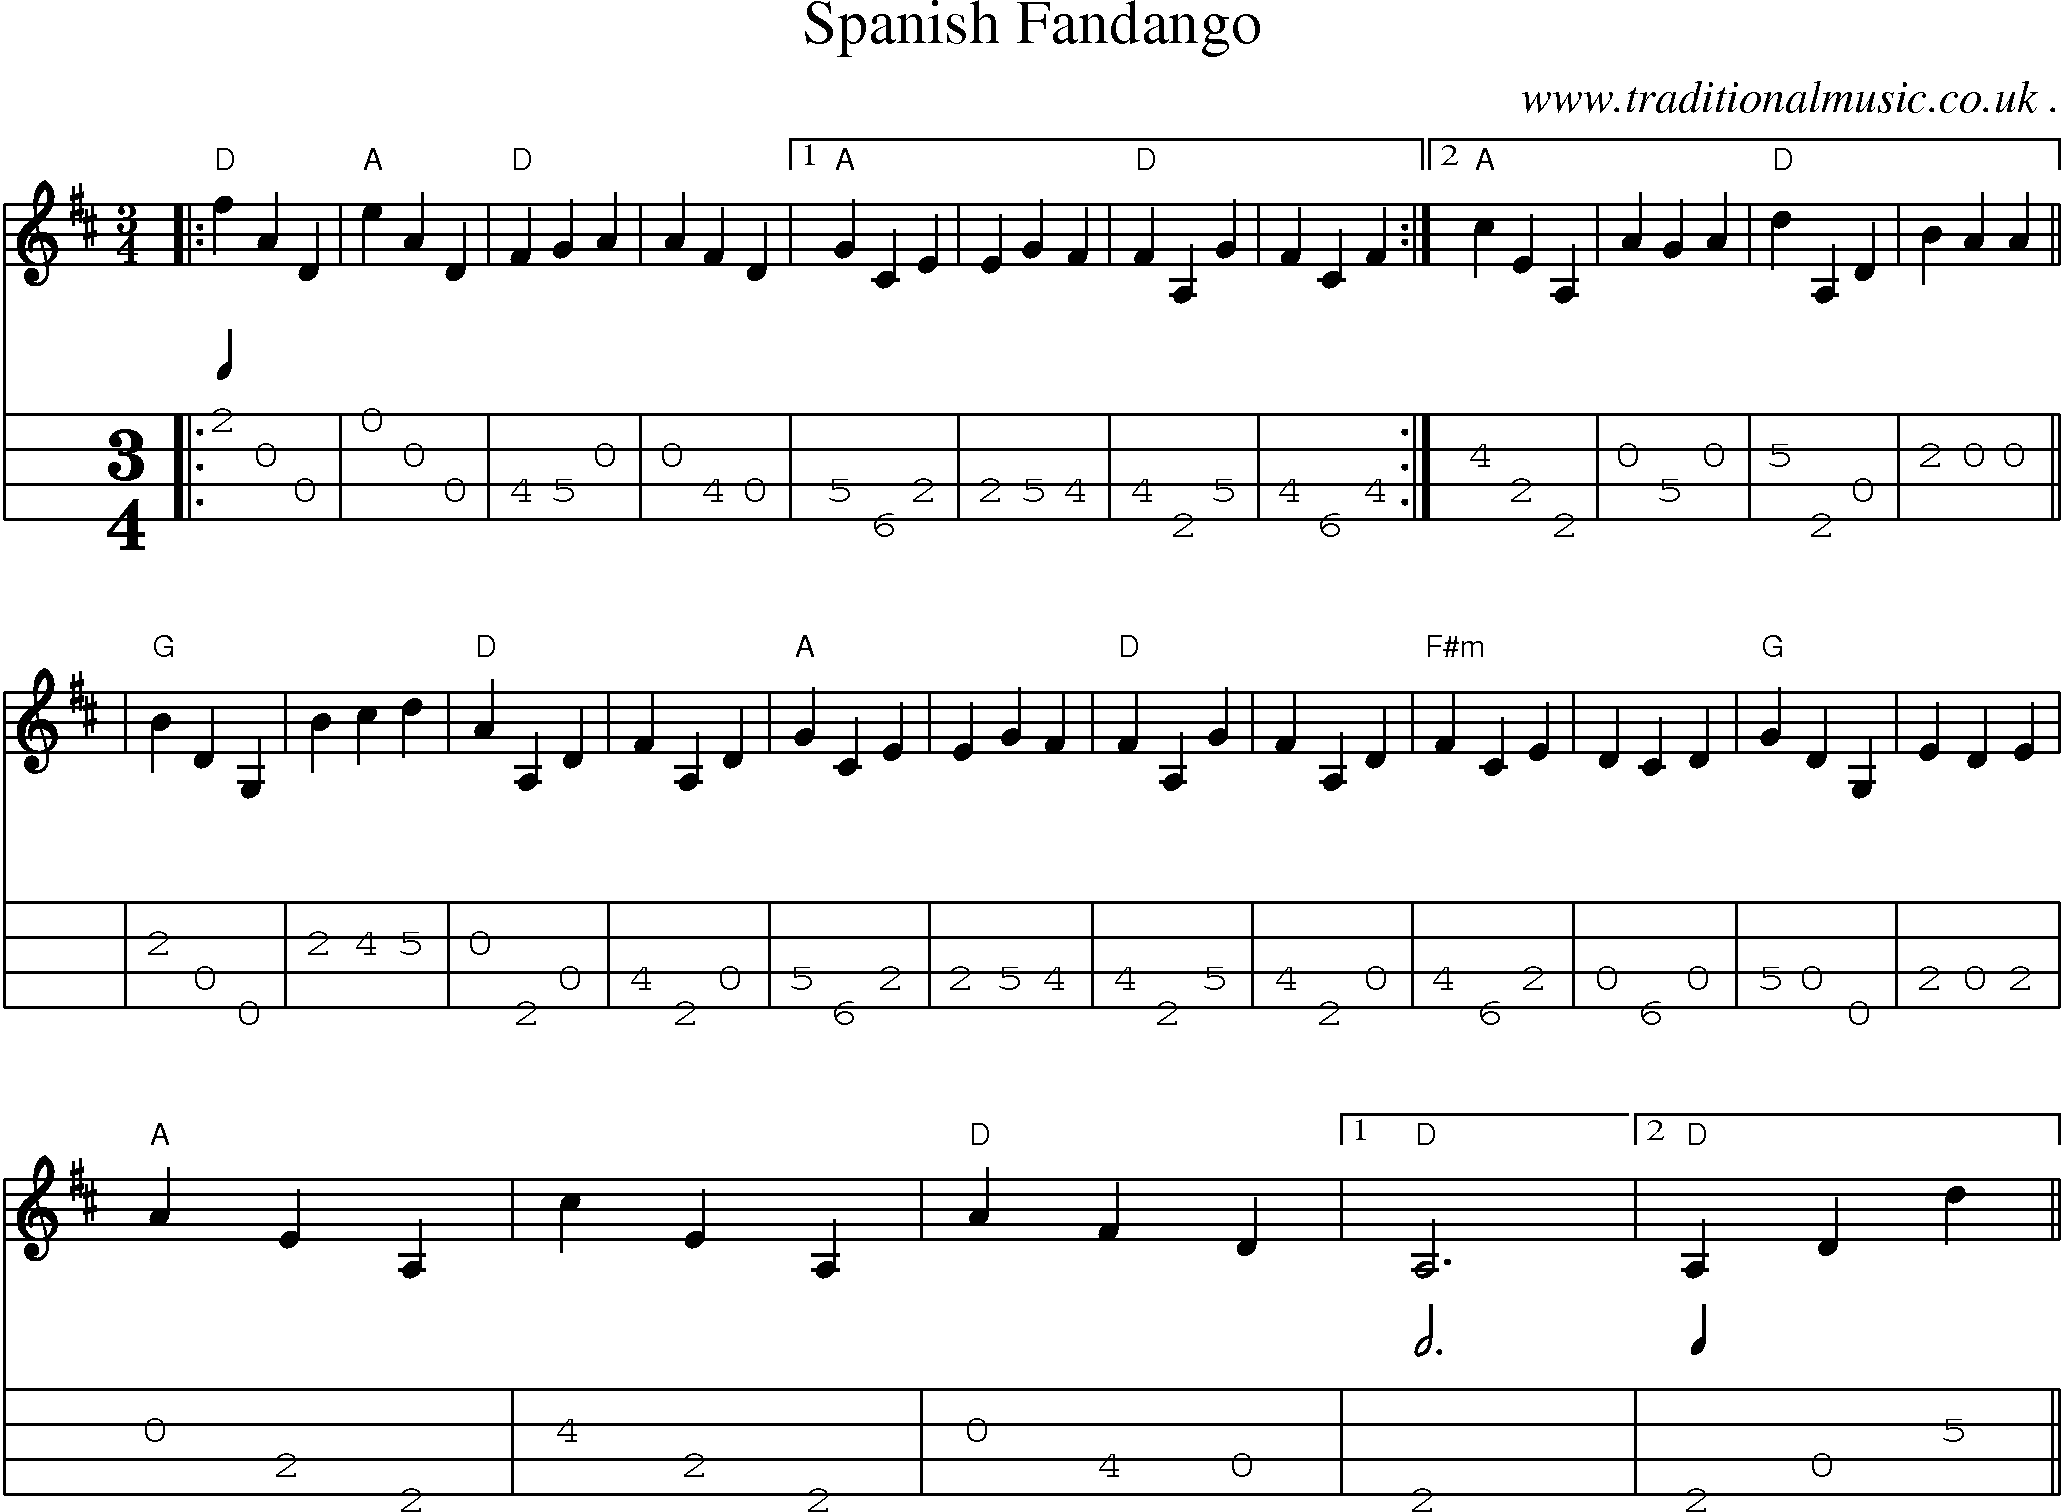 Music Score and Mandolin Tabs for Spanish Fandango